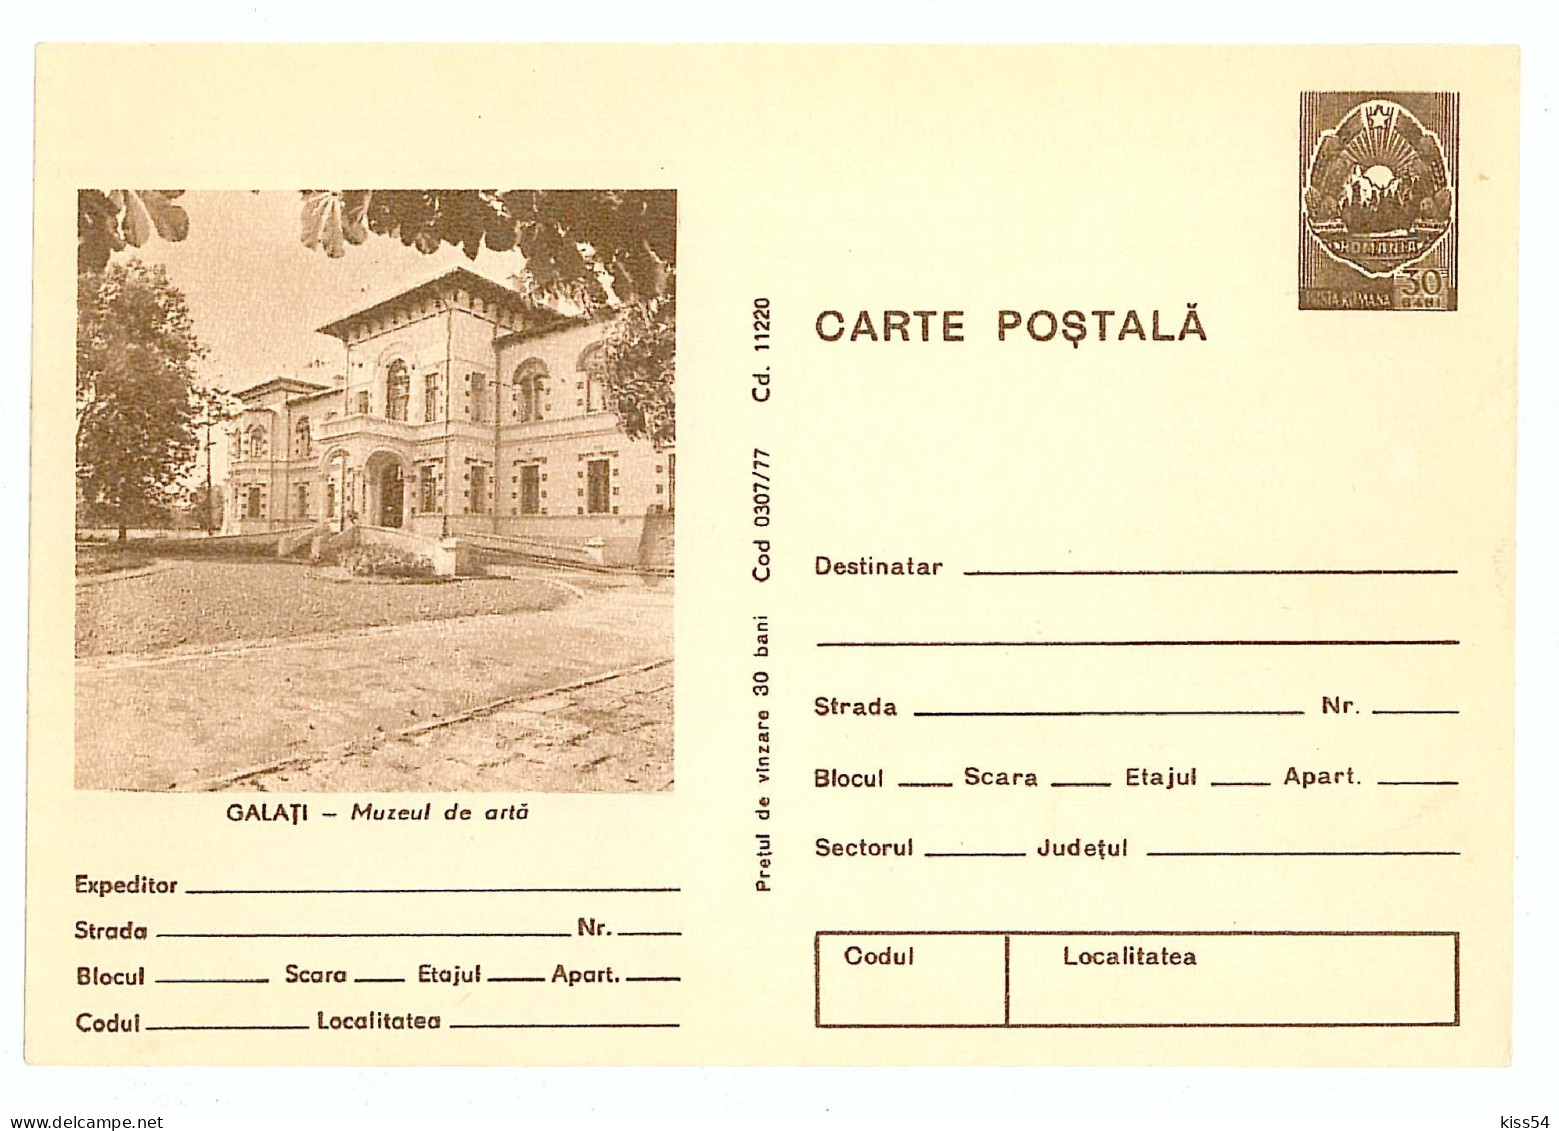 IP 77 A - 307 GALATI - Stationery - Unused - 1977 - Postal Stationery